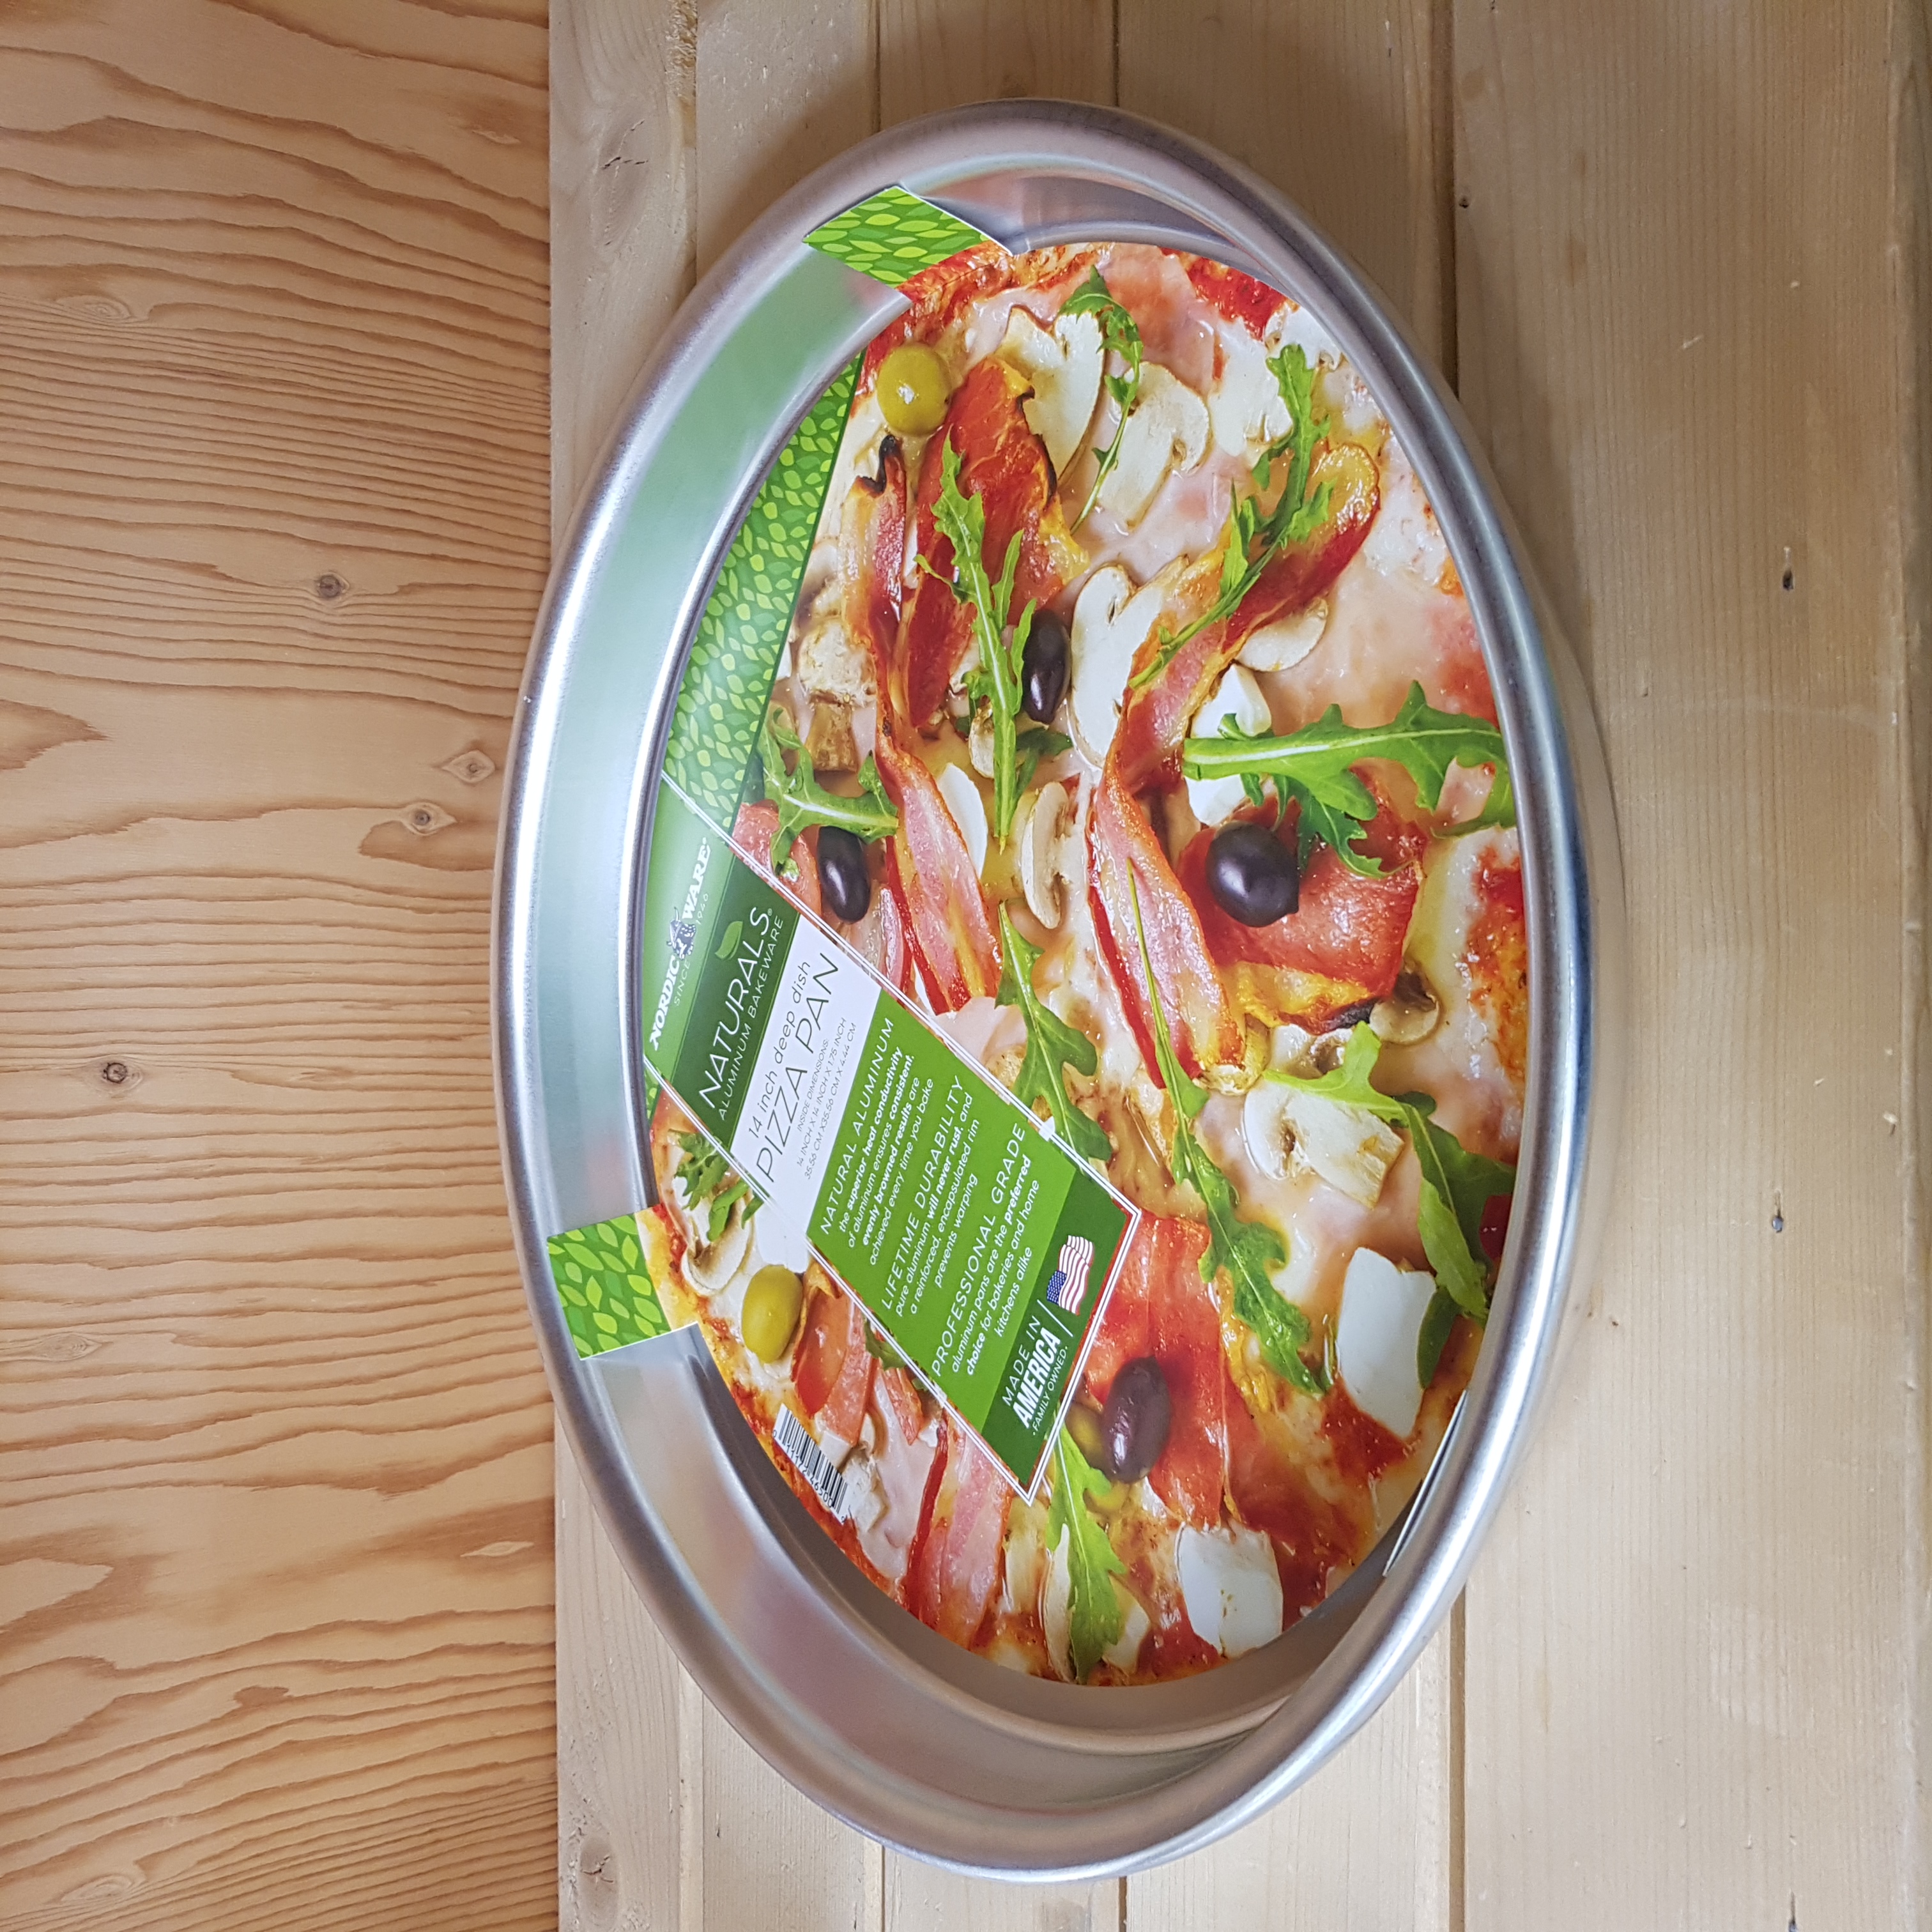 Nordic Ware 14 in. Deep Dish Pizza Pan